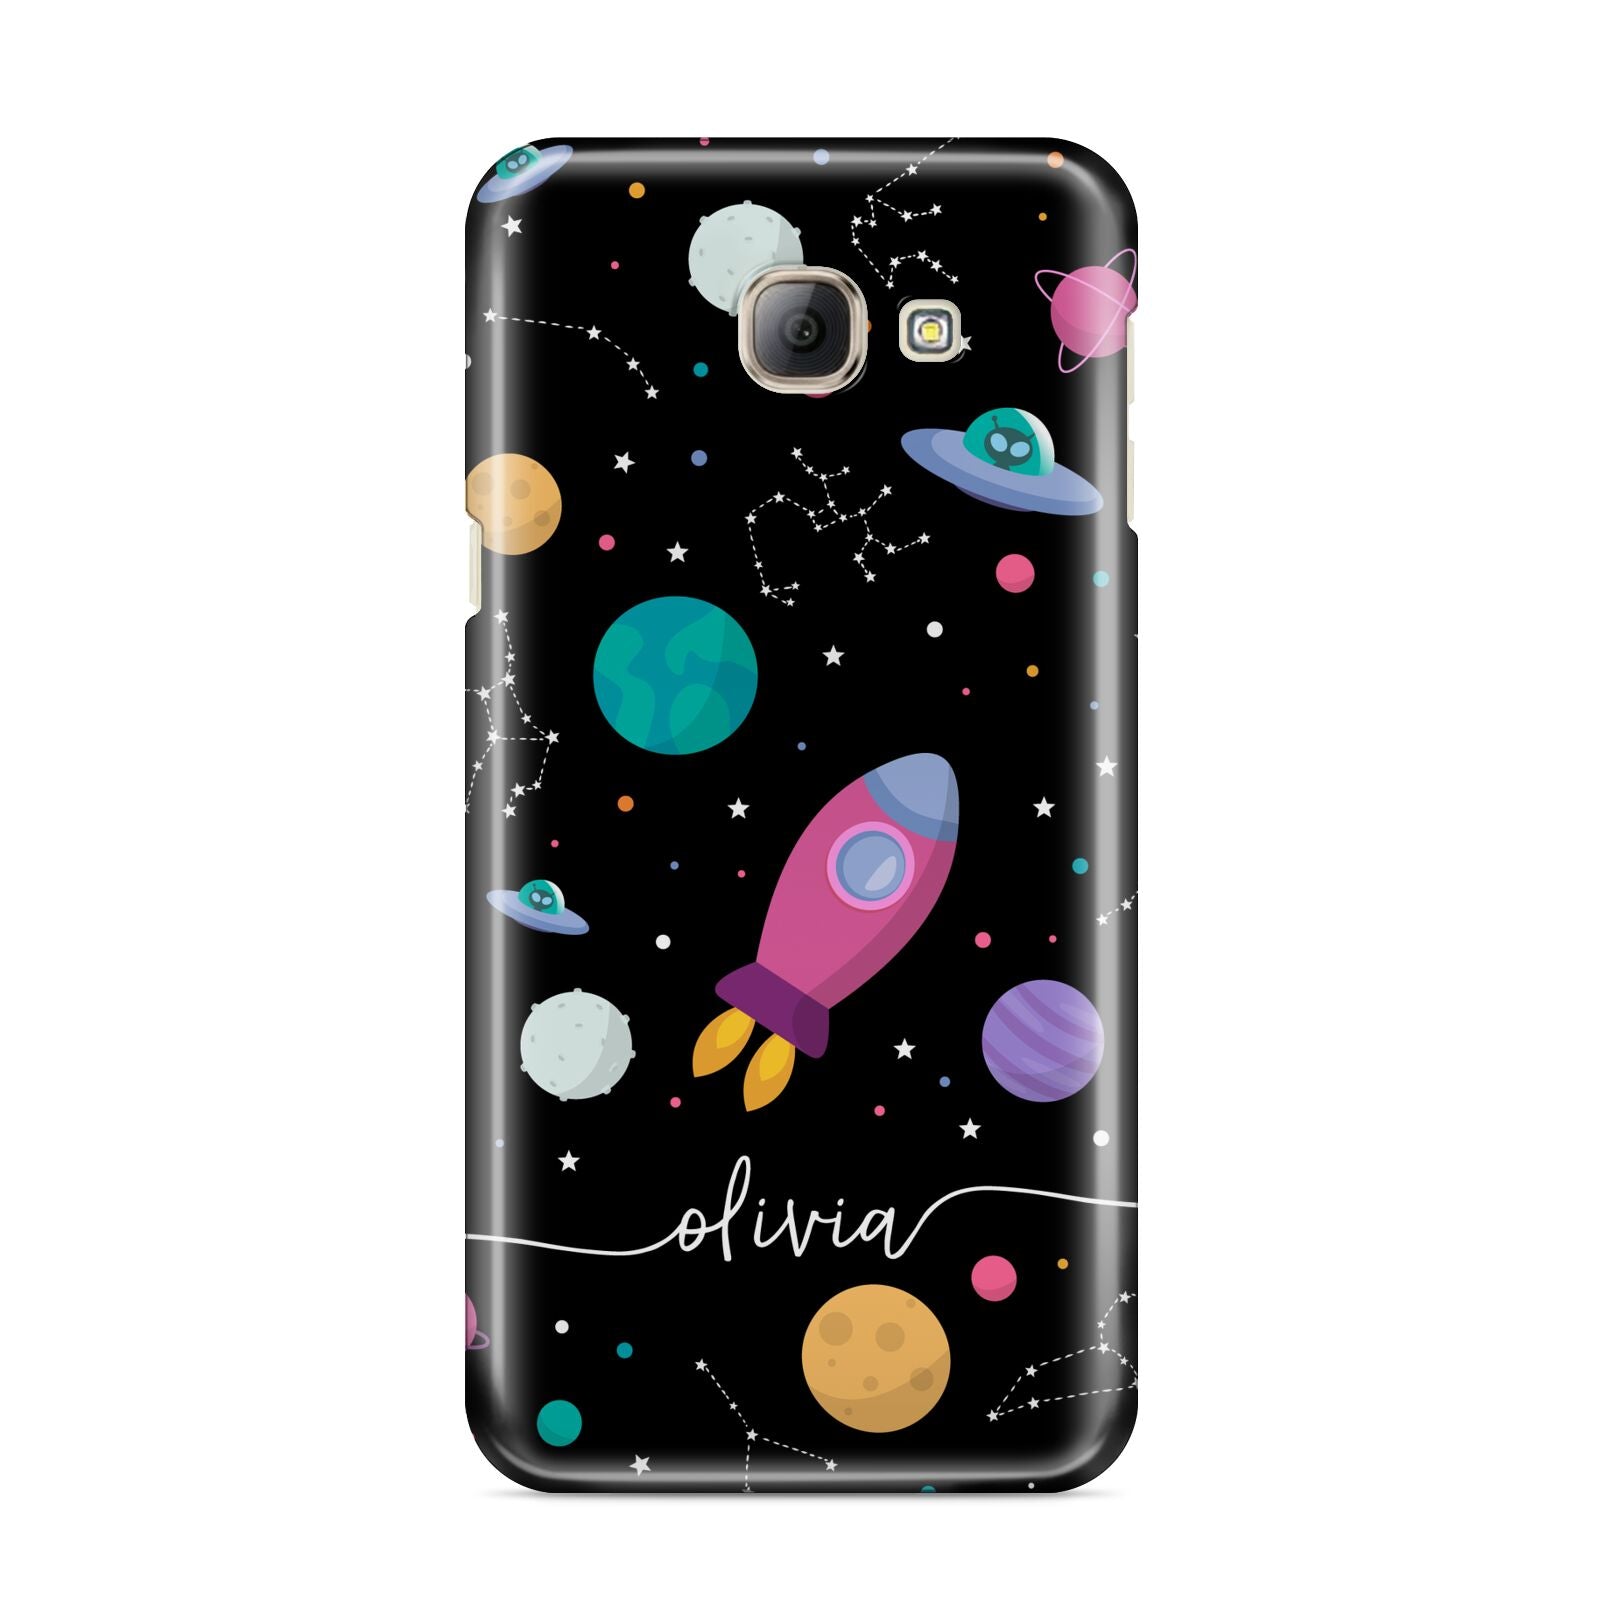 Galaxy Artwork with Name Samsung Galaxy A8 2016 Case